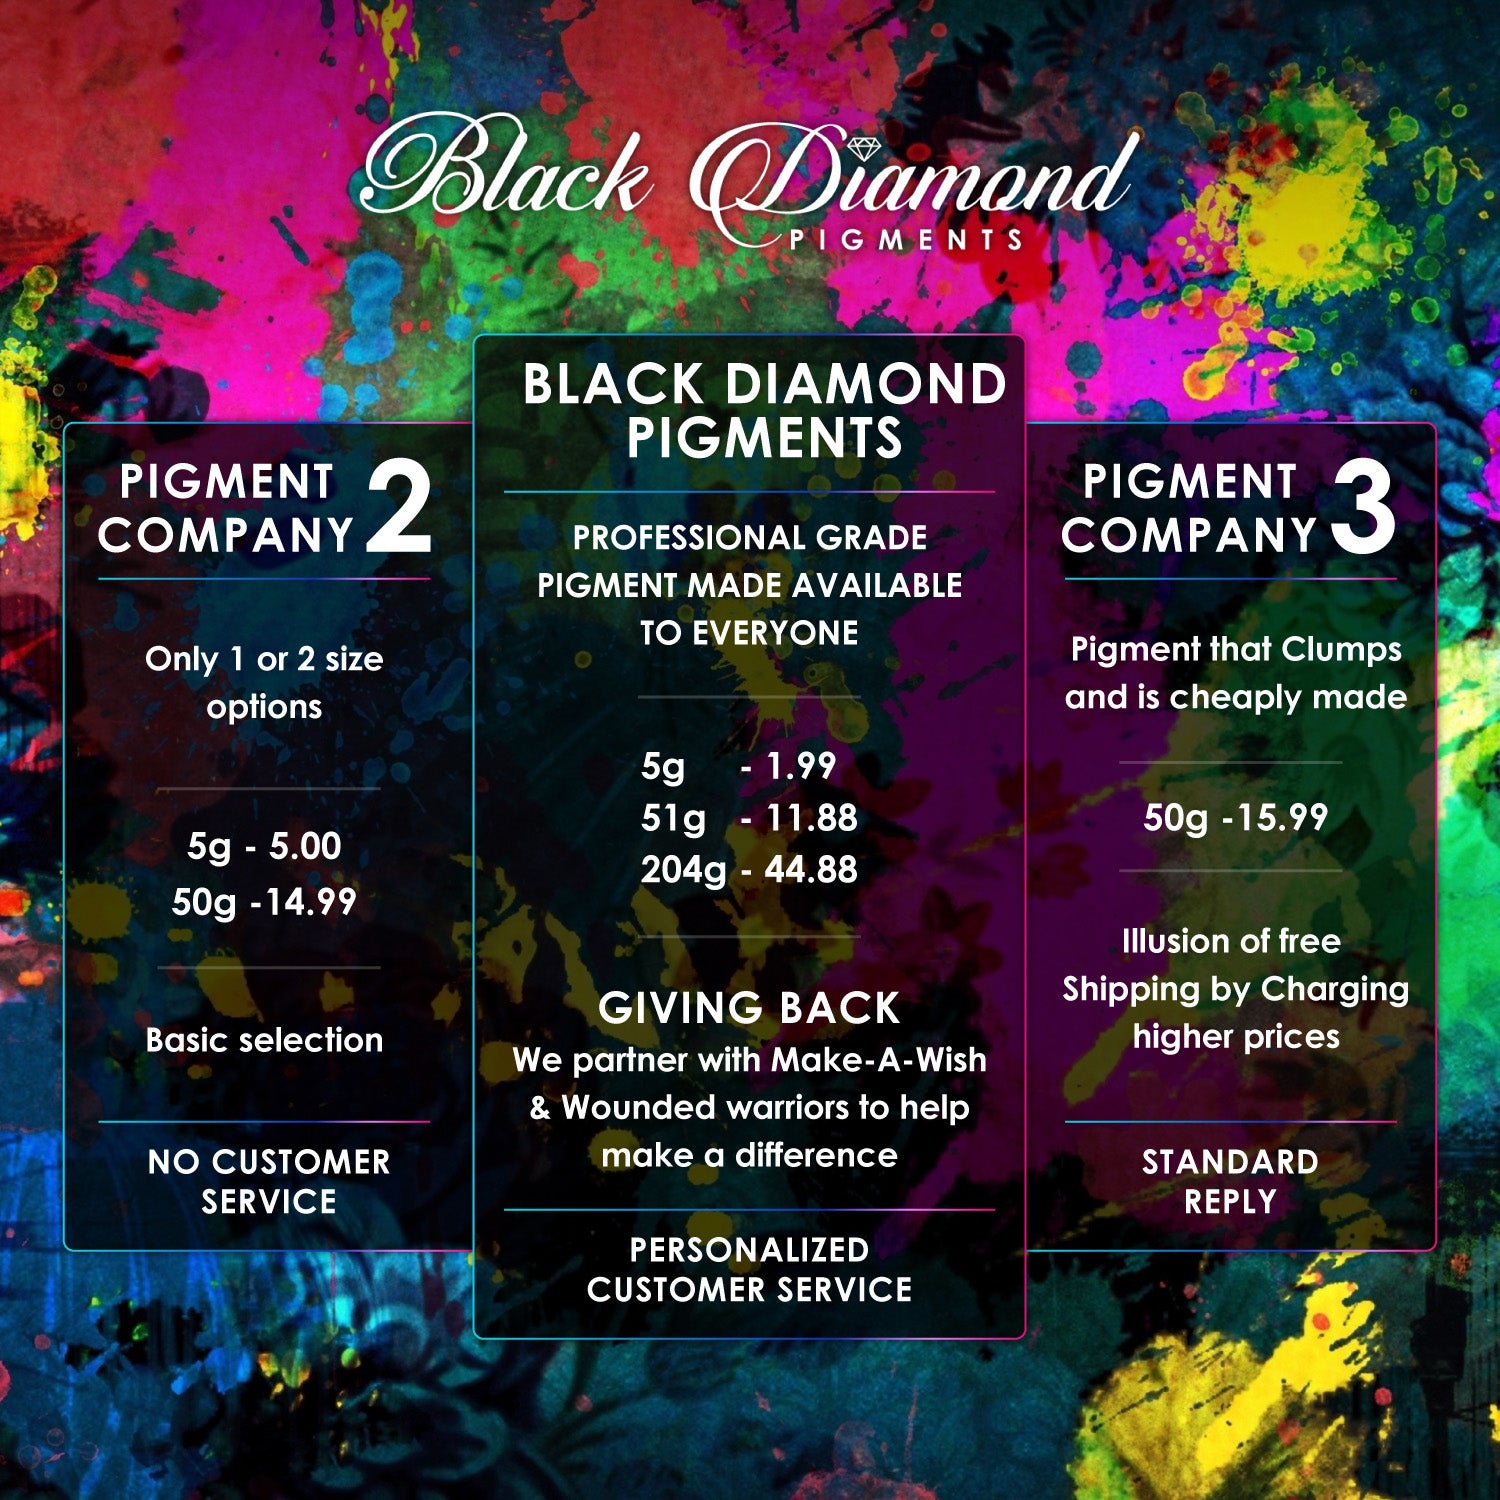 "GREEN APPLE" Black Diamond Pigments